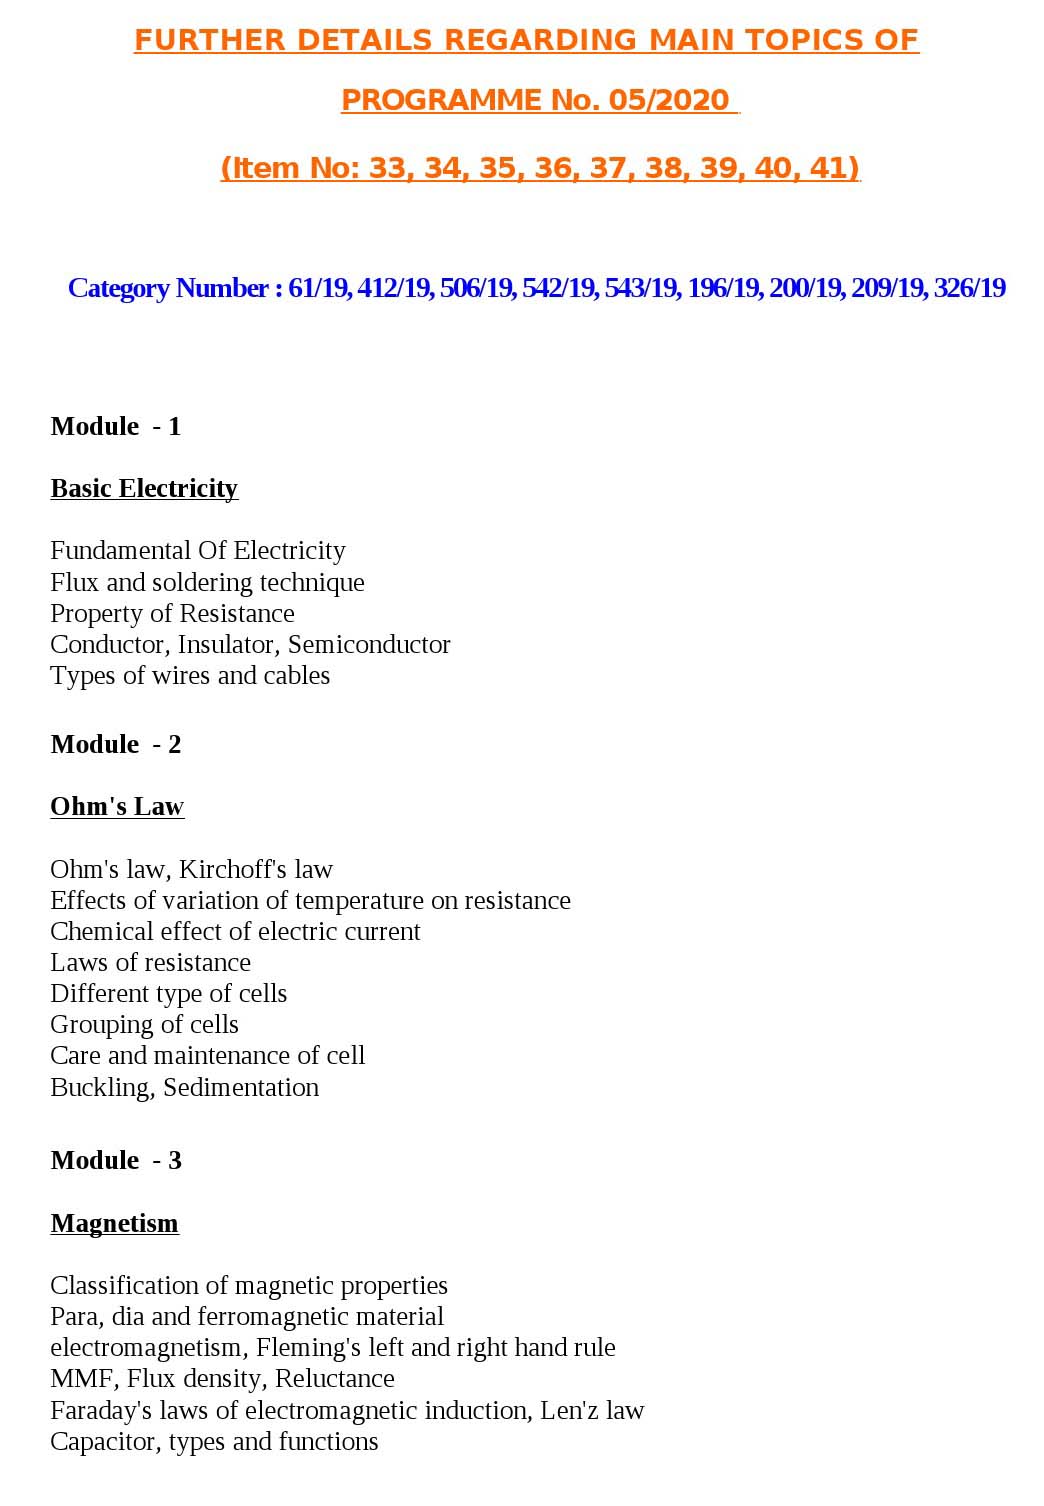 Kerala PSC Technician Grade II Exam Syllabus May 2020 - Notification Image 1